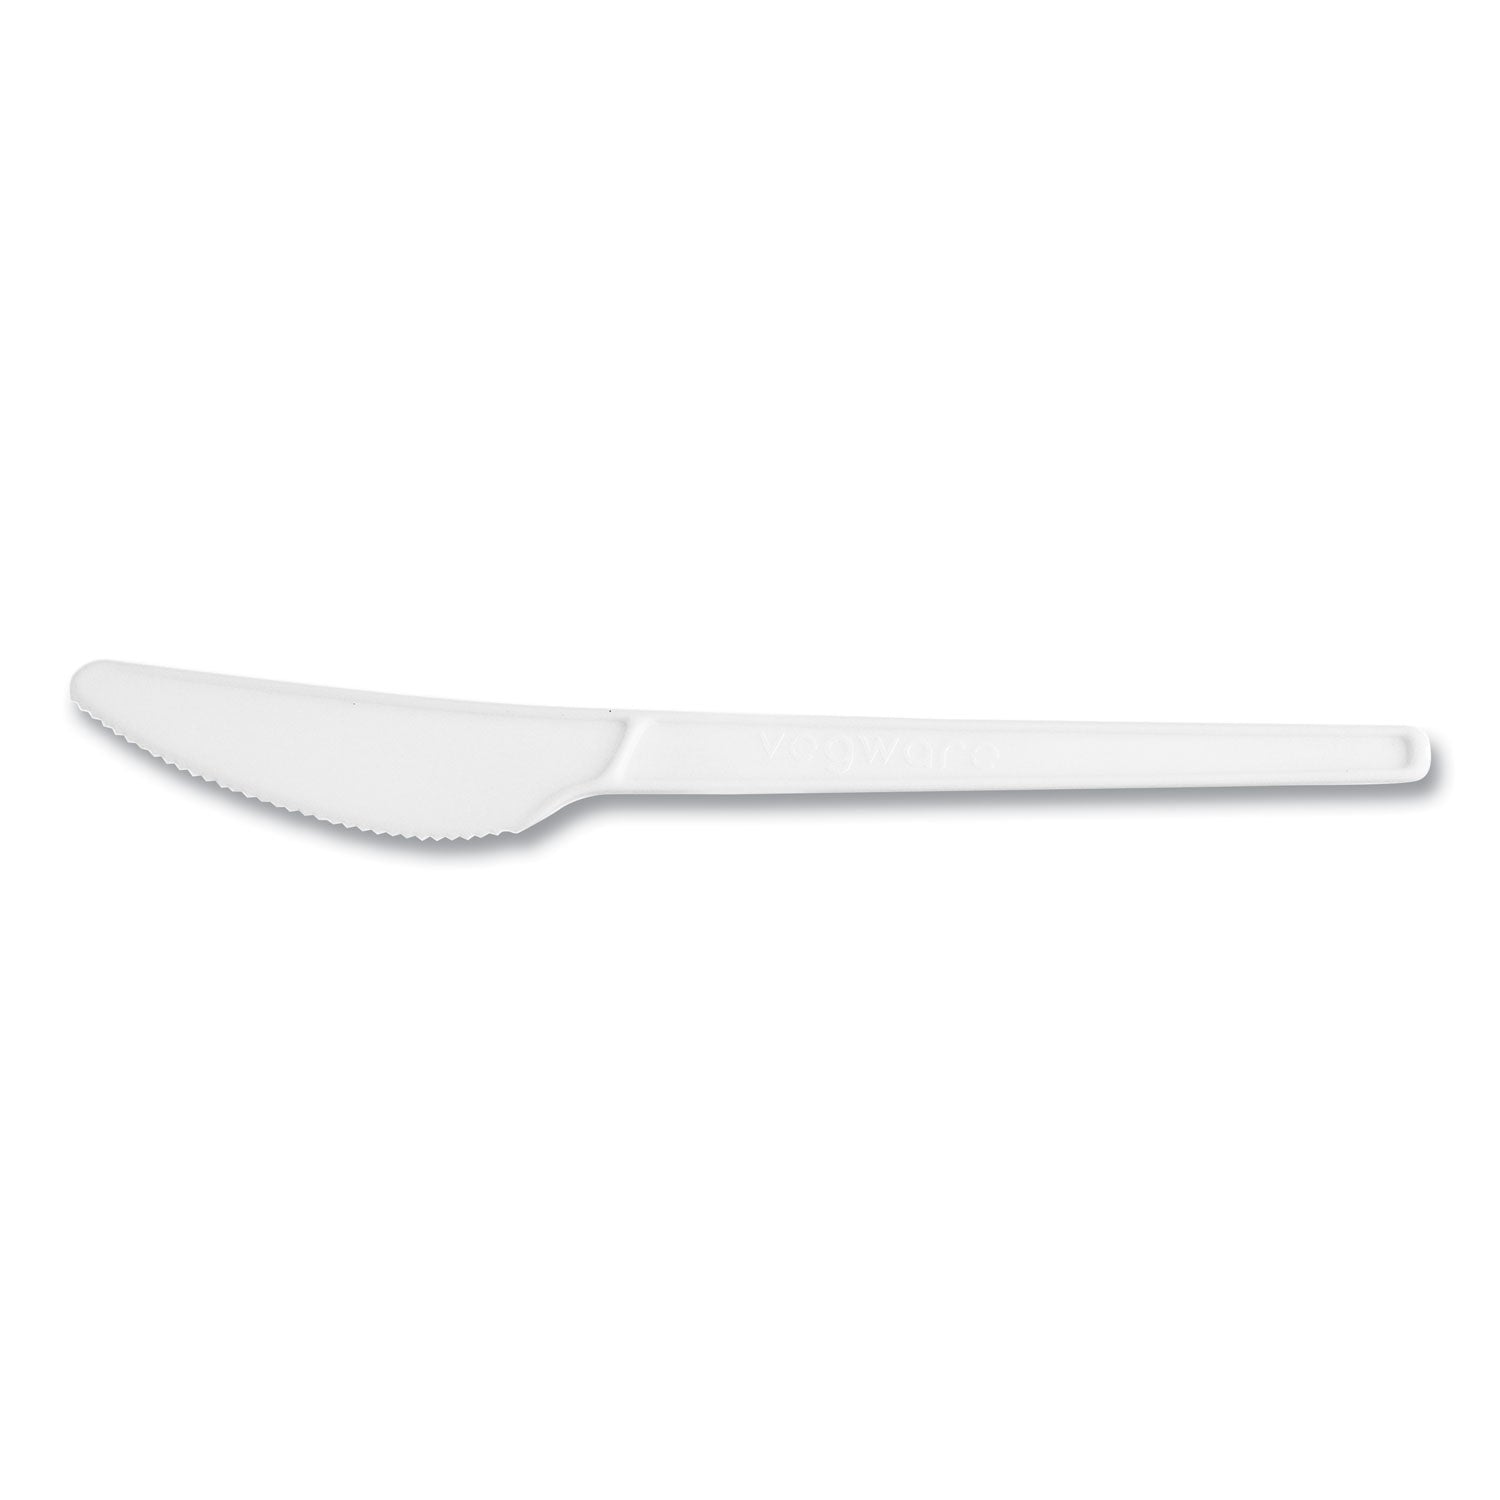 white-cpla-cutlery-knife-1000-carton_vegvwkn65 - 1